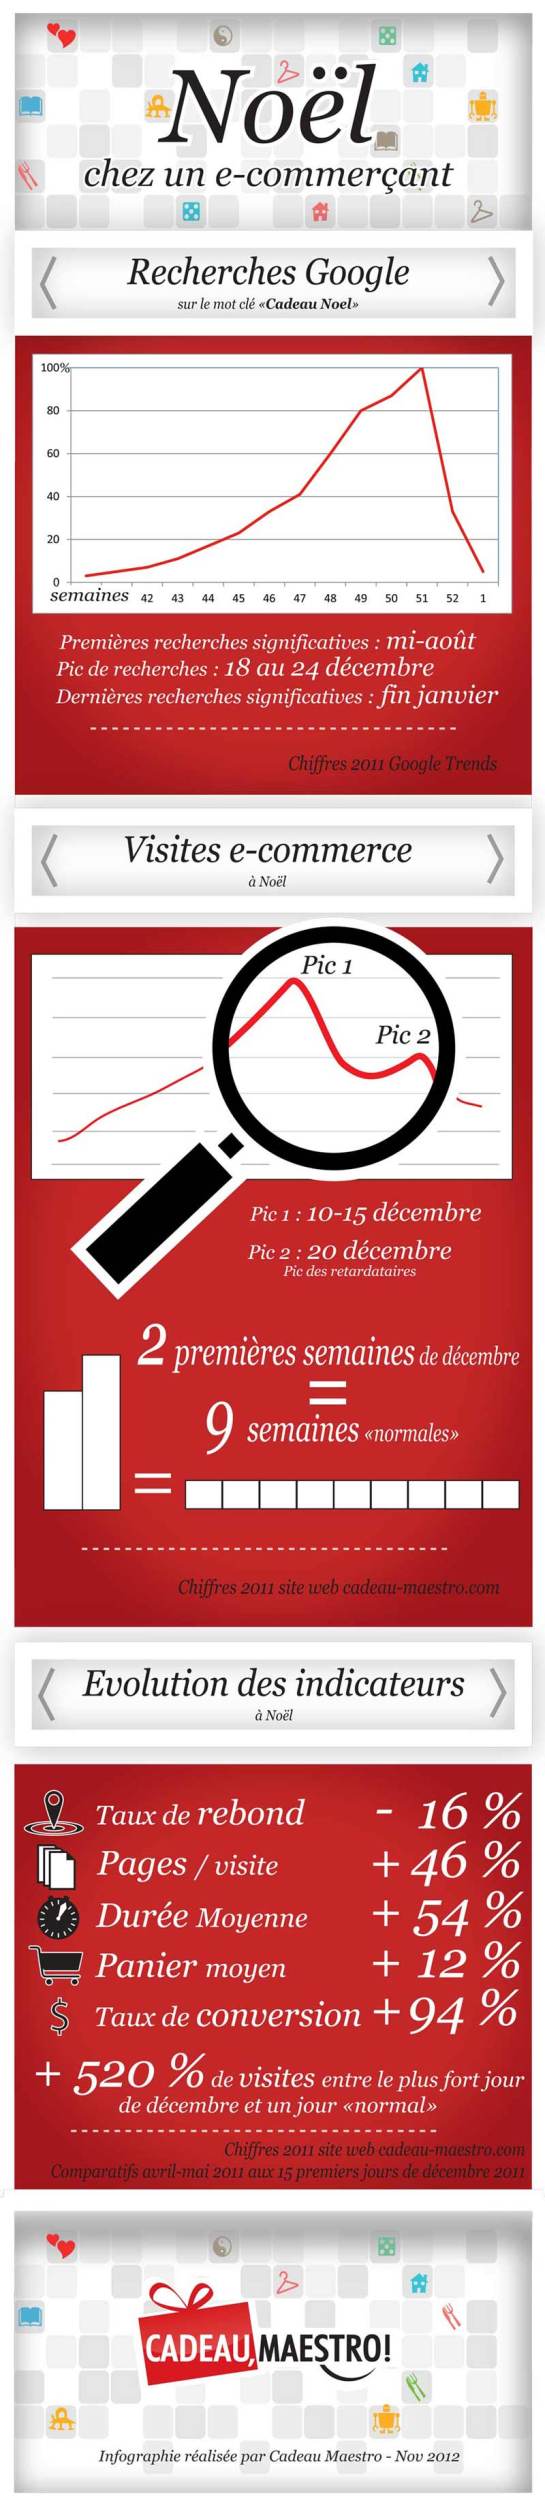 Infographie - Webmarketing Noël - Statistiques